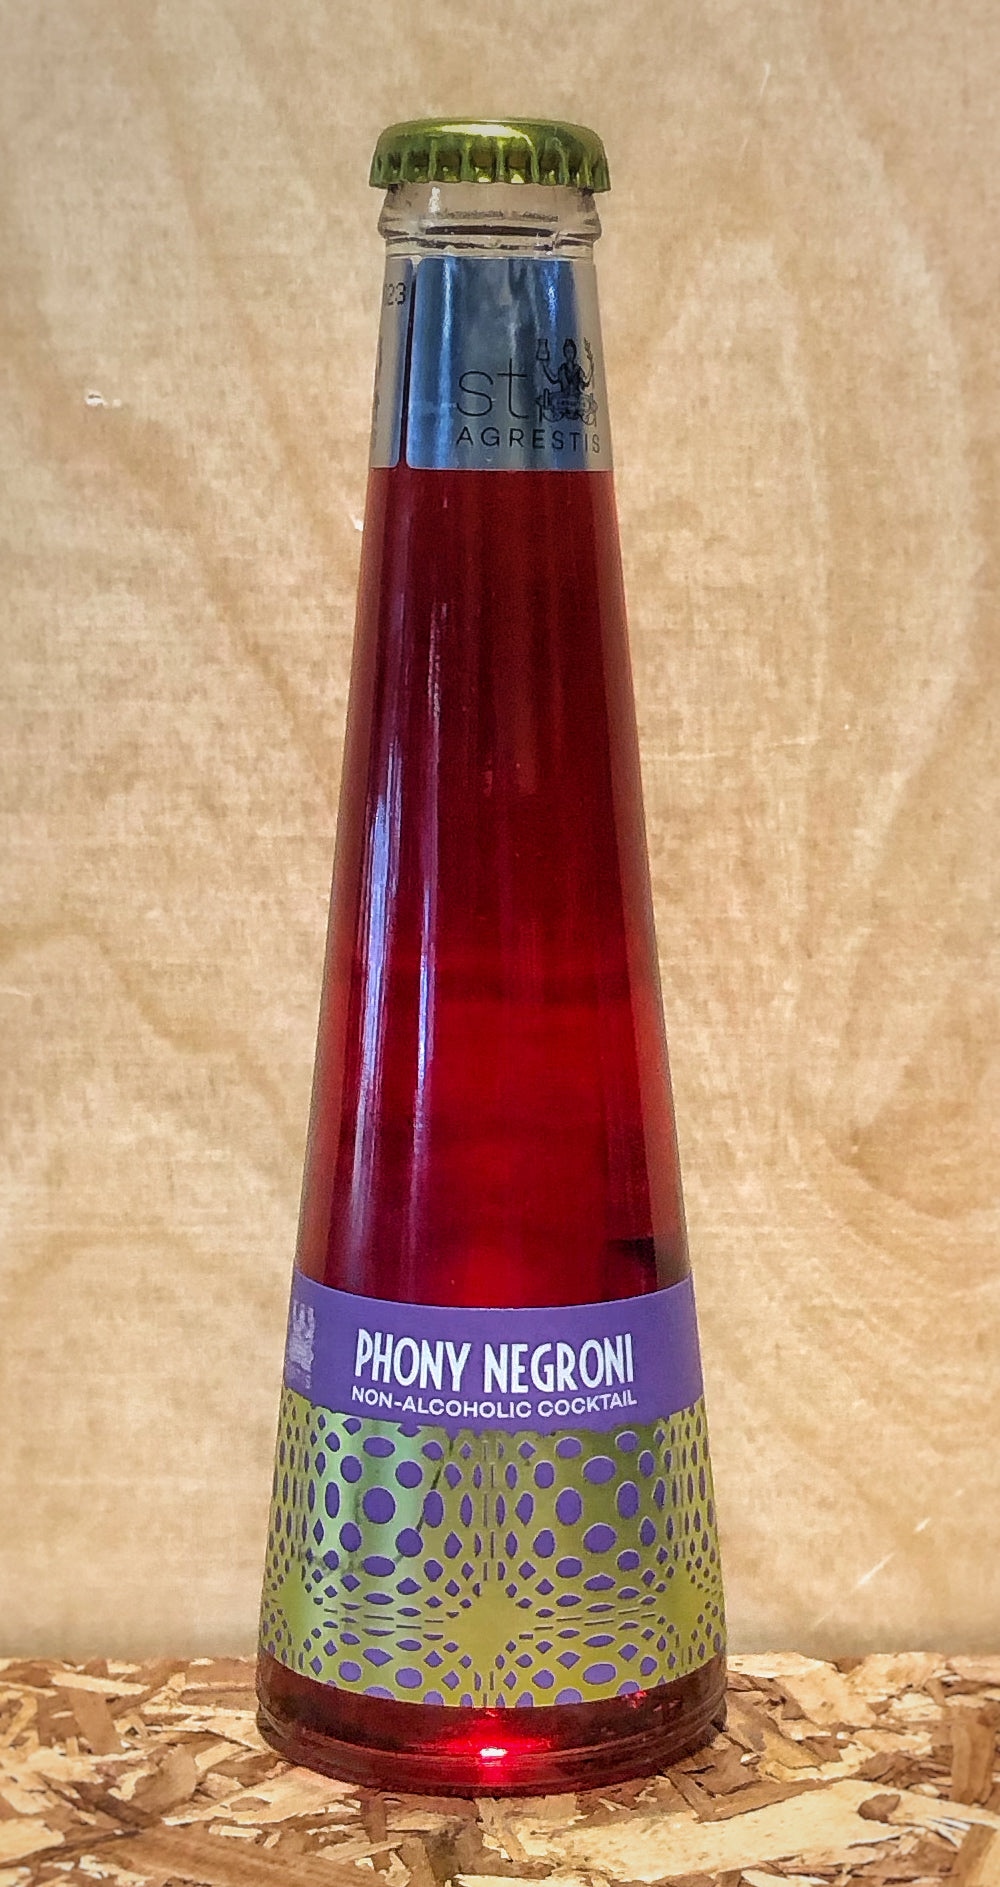 St. Agrestis 'Phony Negroni' Non-Alcoholic Cocktail (Brooklyn, NY)